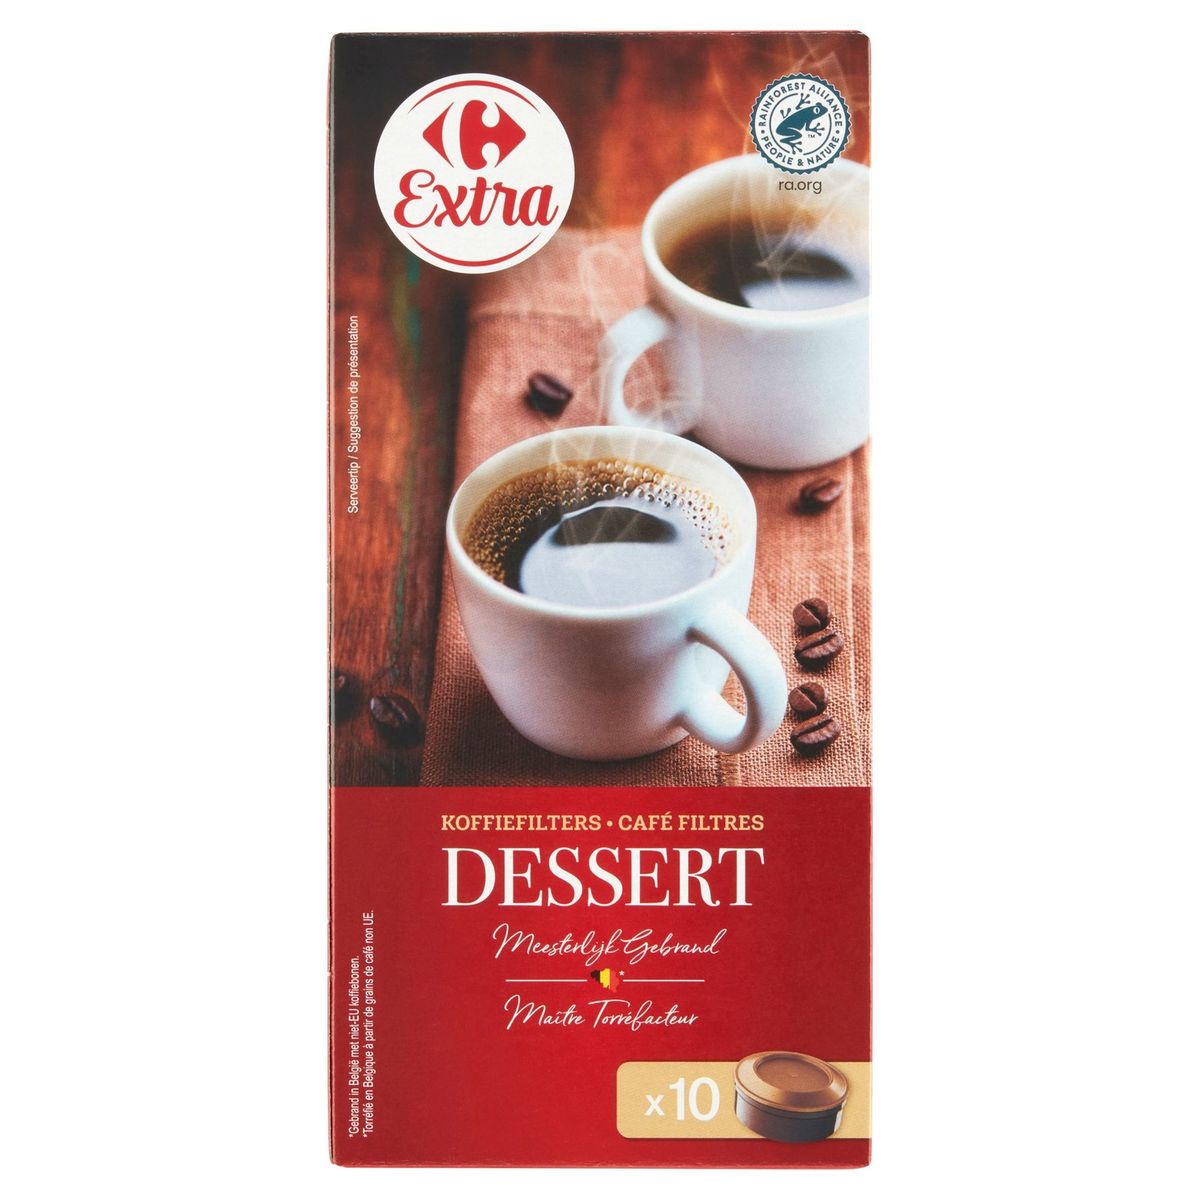 Carrefour Extra Koffiefilters Dessert 10 Stuks 75 g